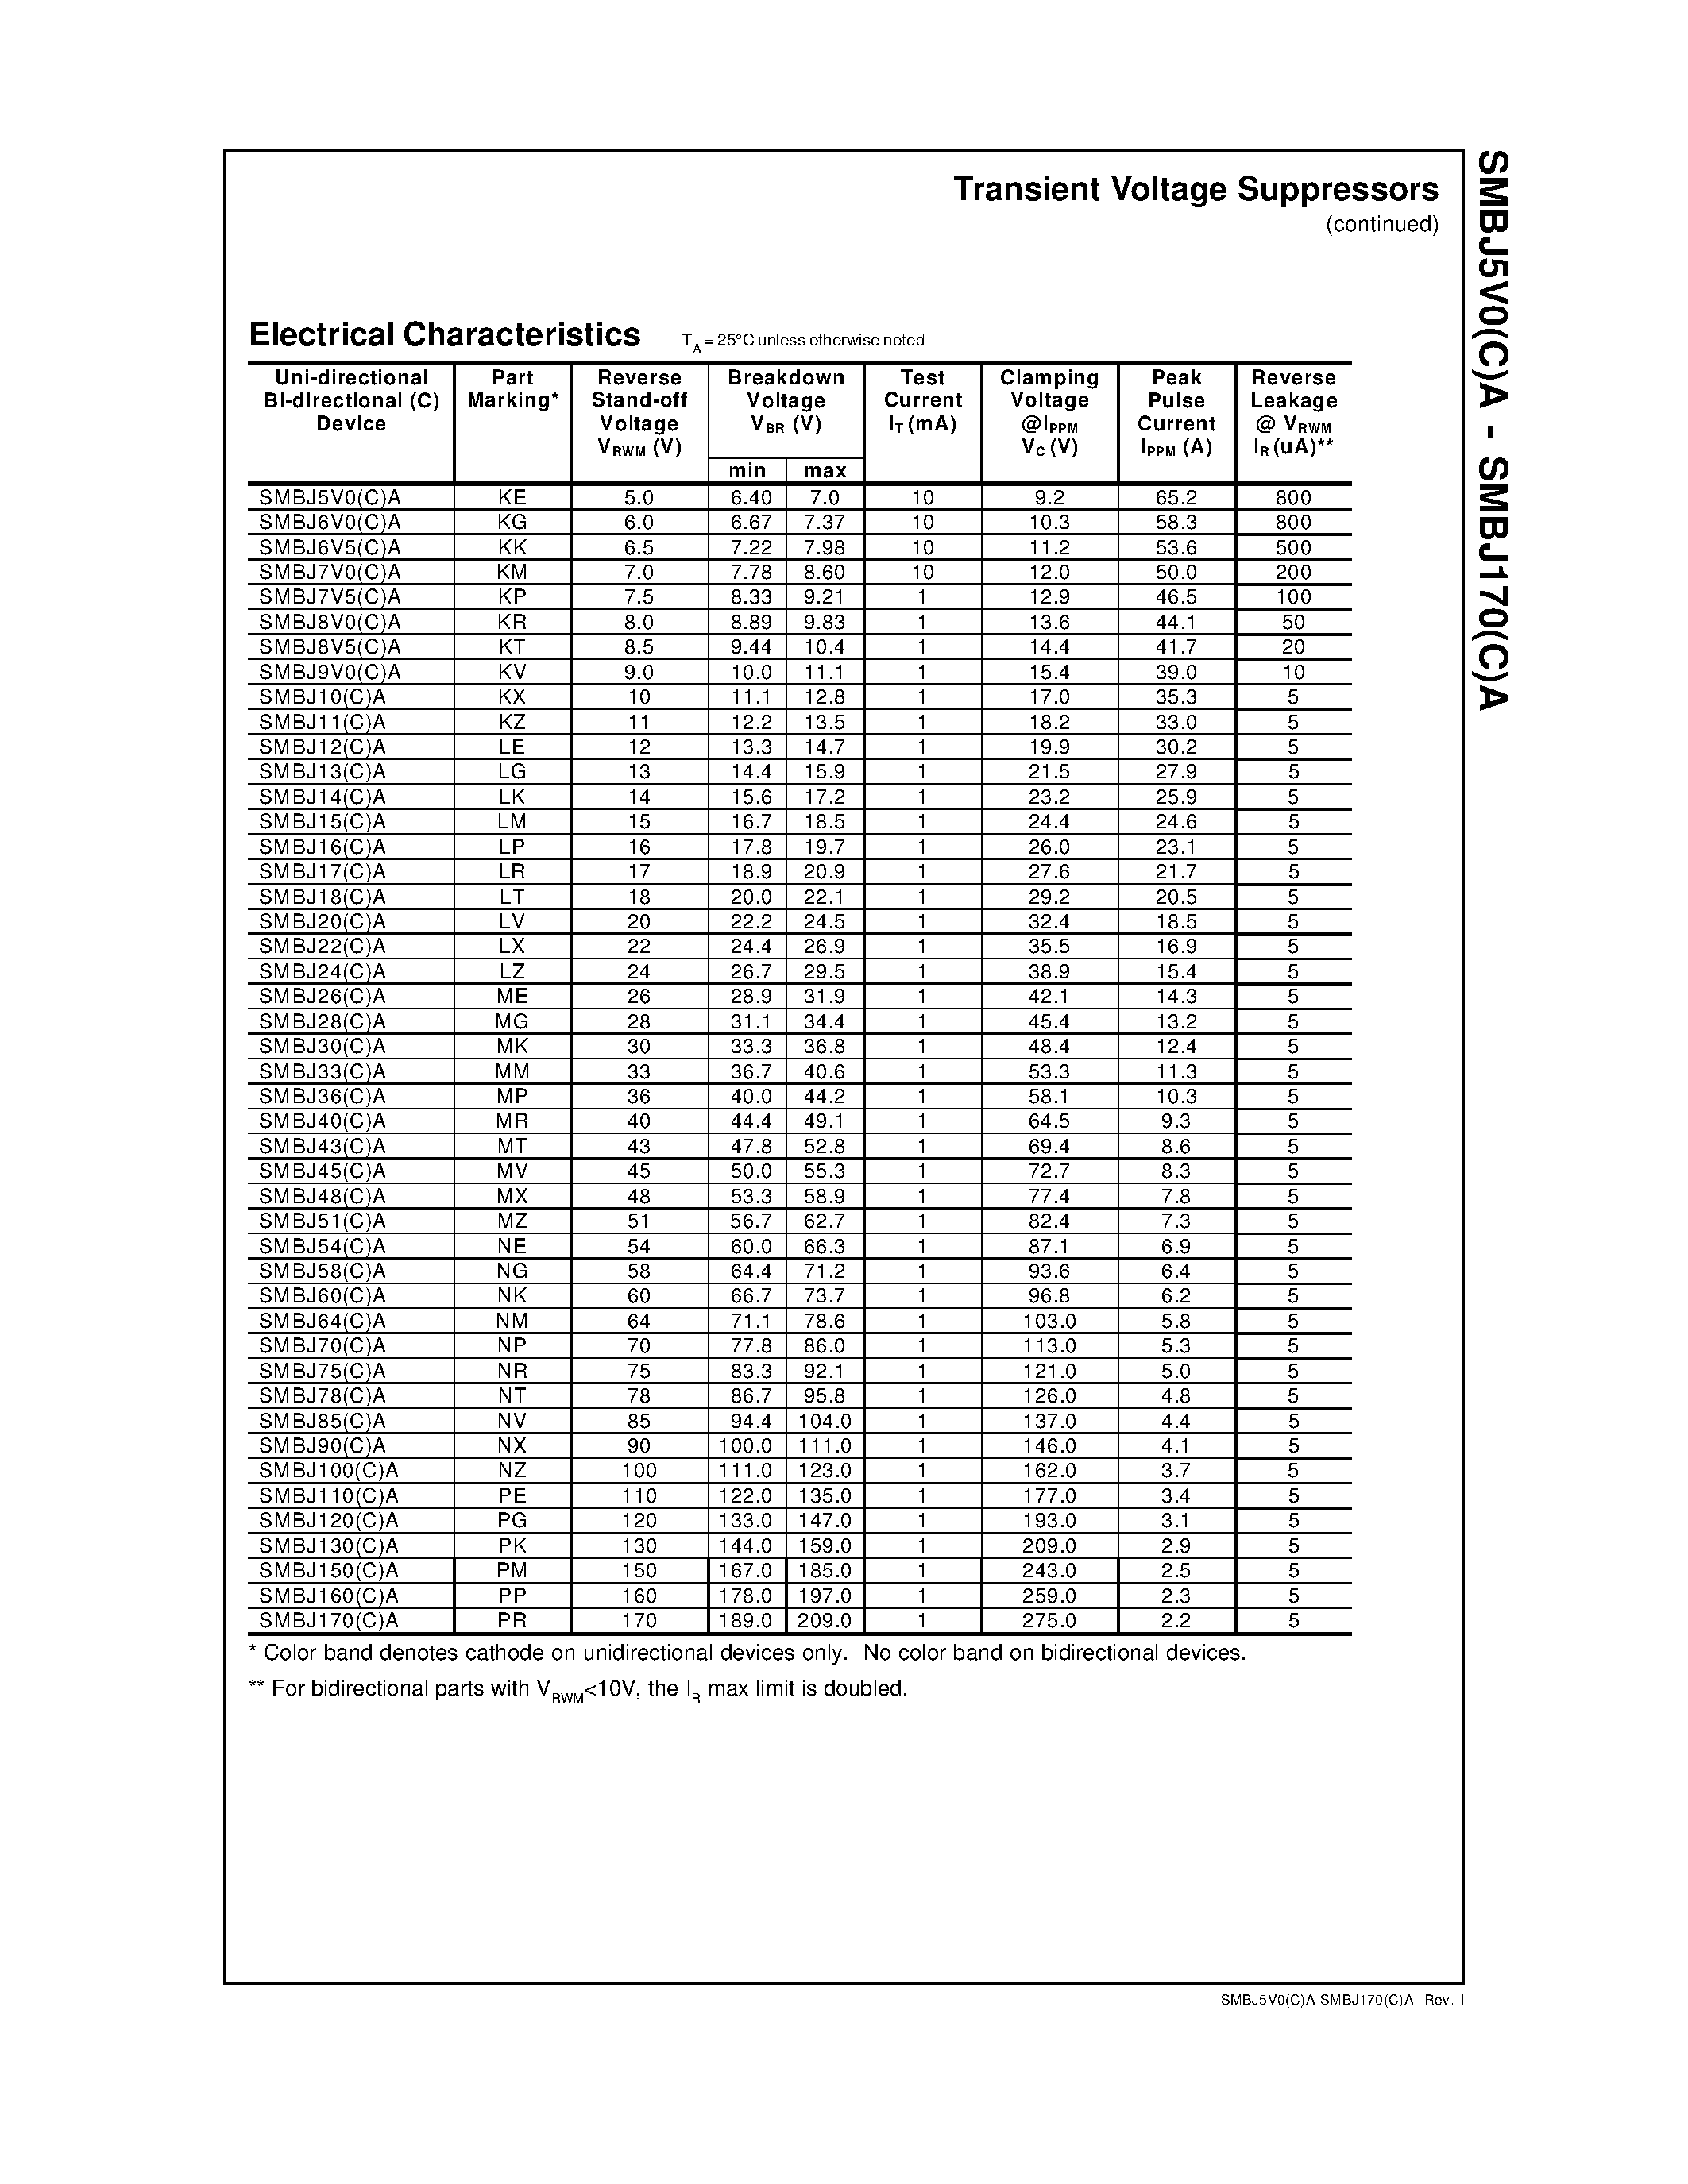 Datasheet SMBJ150A - Transient Voltage Suppressors SMBJ5V0(C)A - SMBJ170(C)A page 2